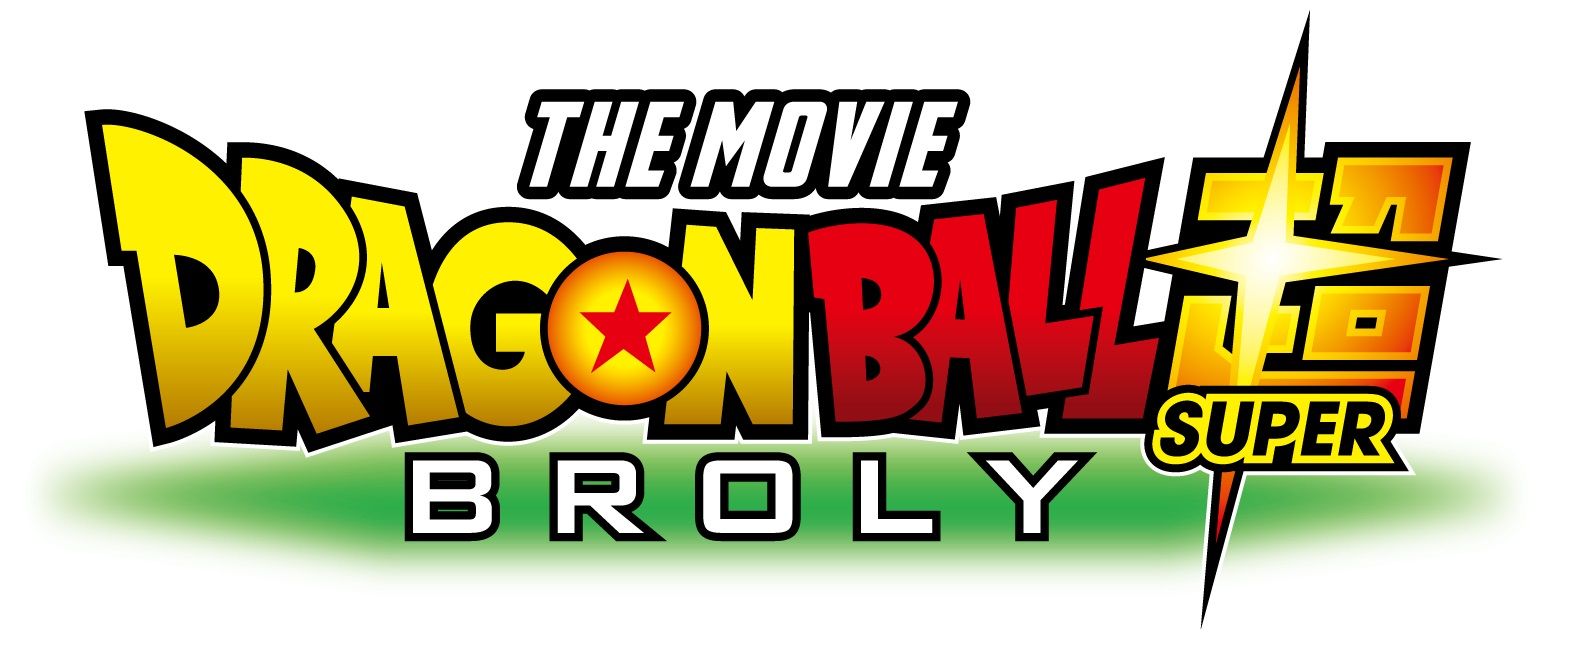 db-super-broly-logo.jpg